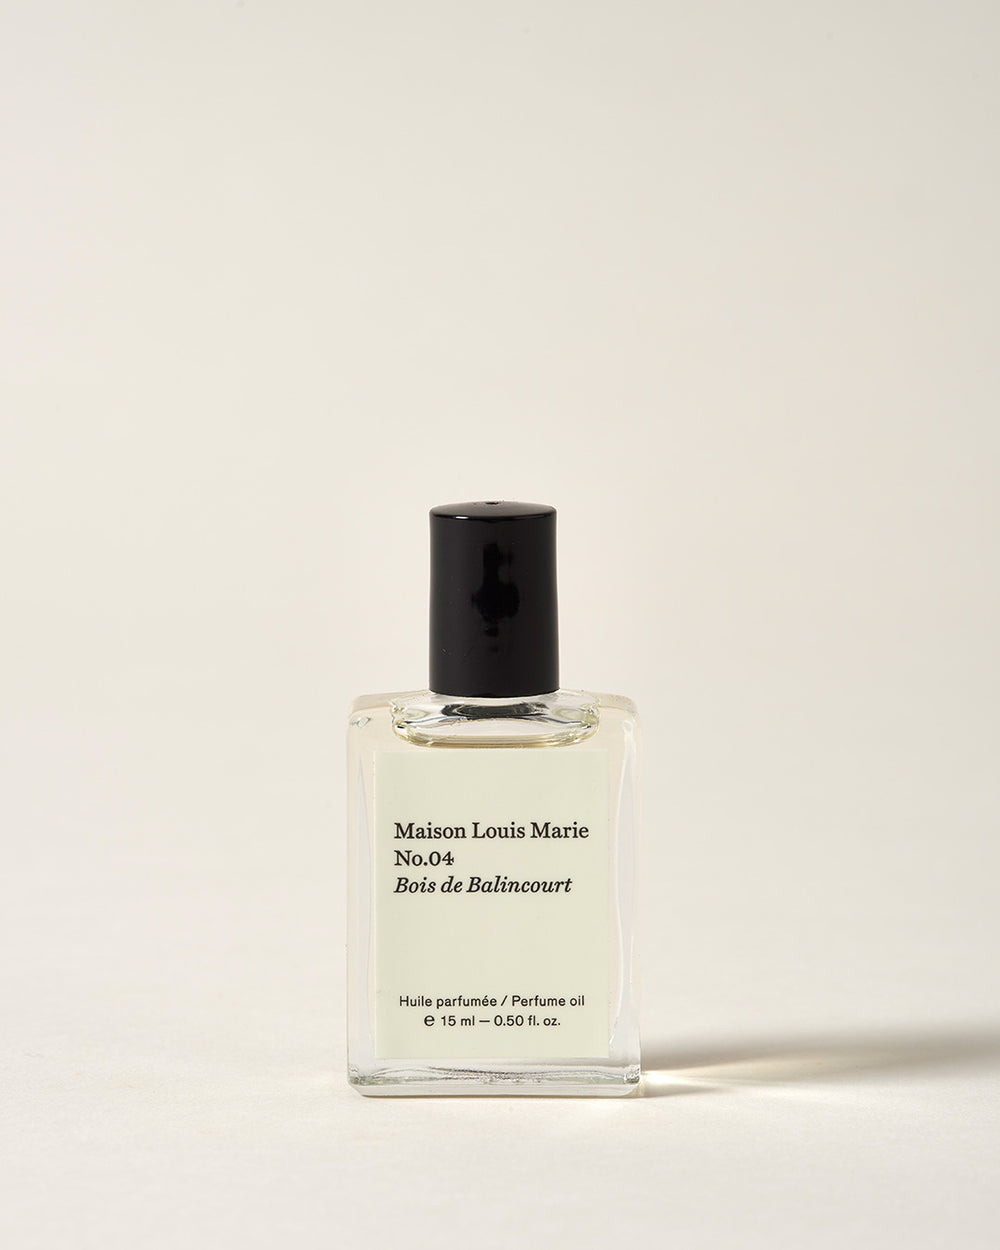 Maison Louis Marie No. 04 Bois de Balincourt Luxury Perfume Gift Set